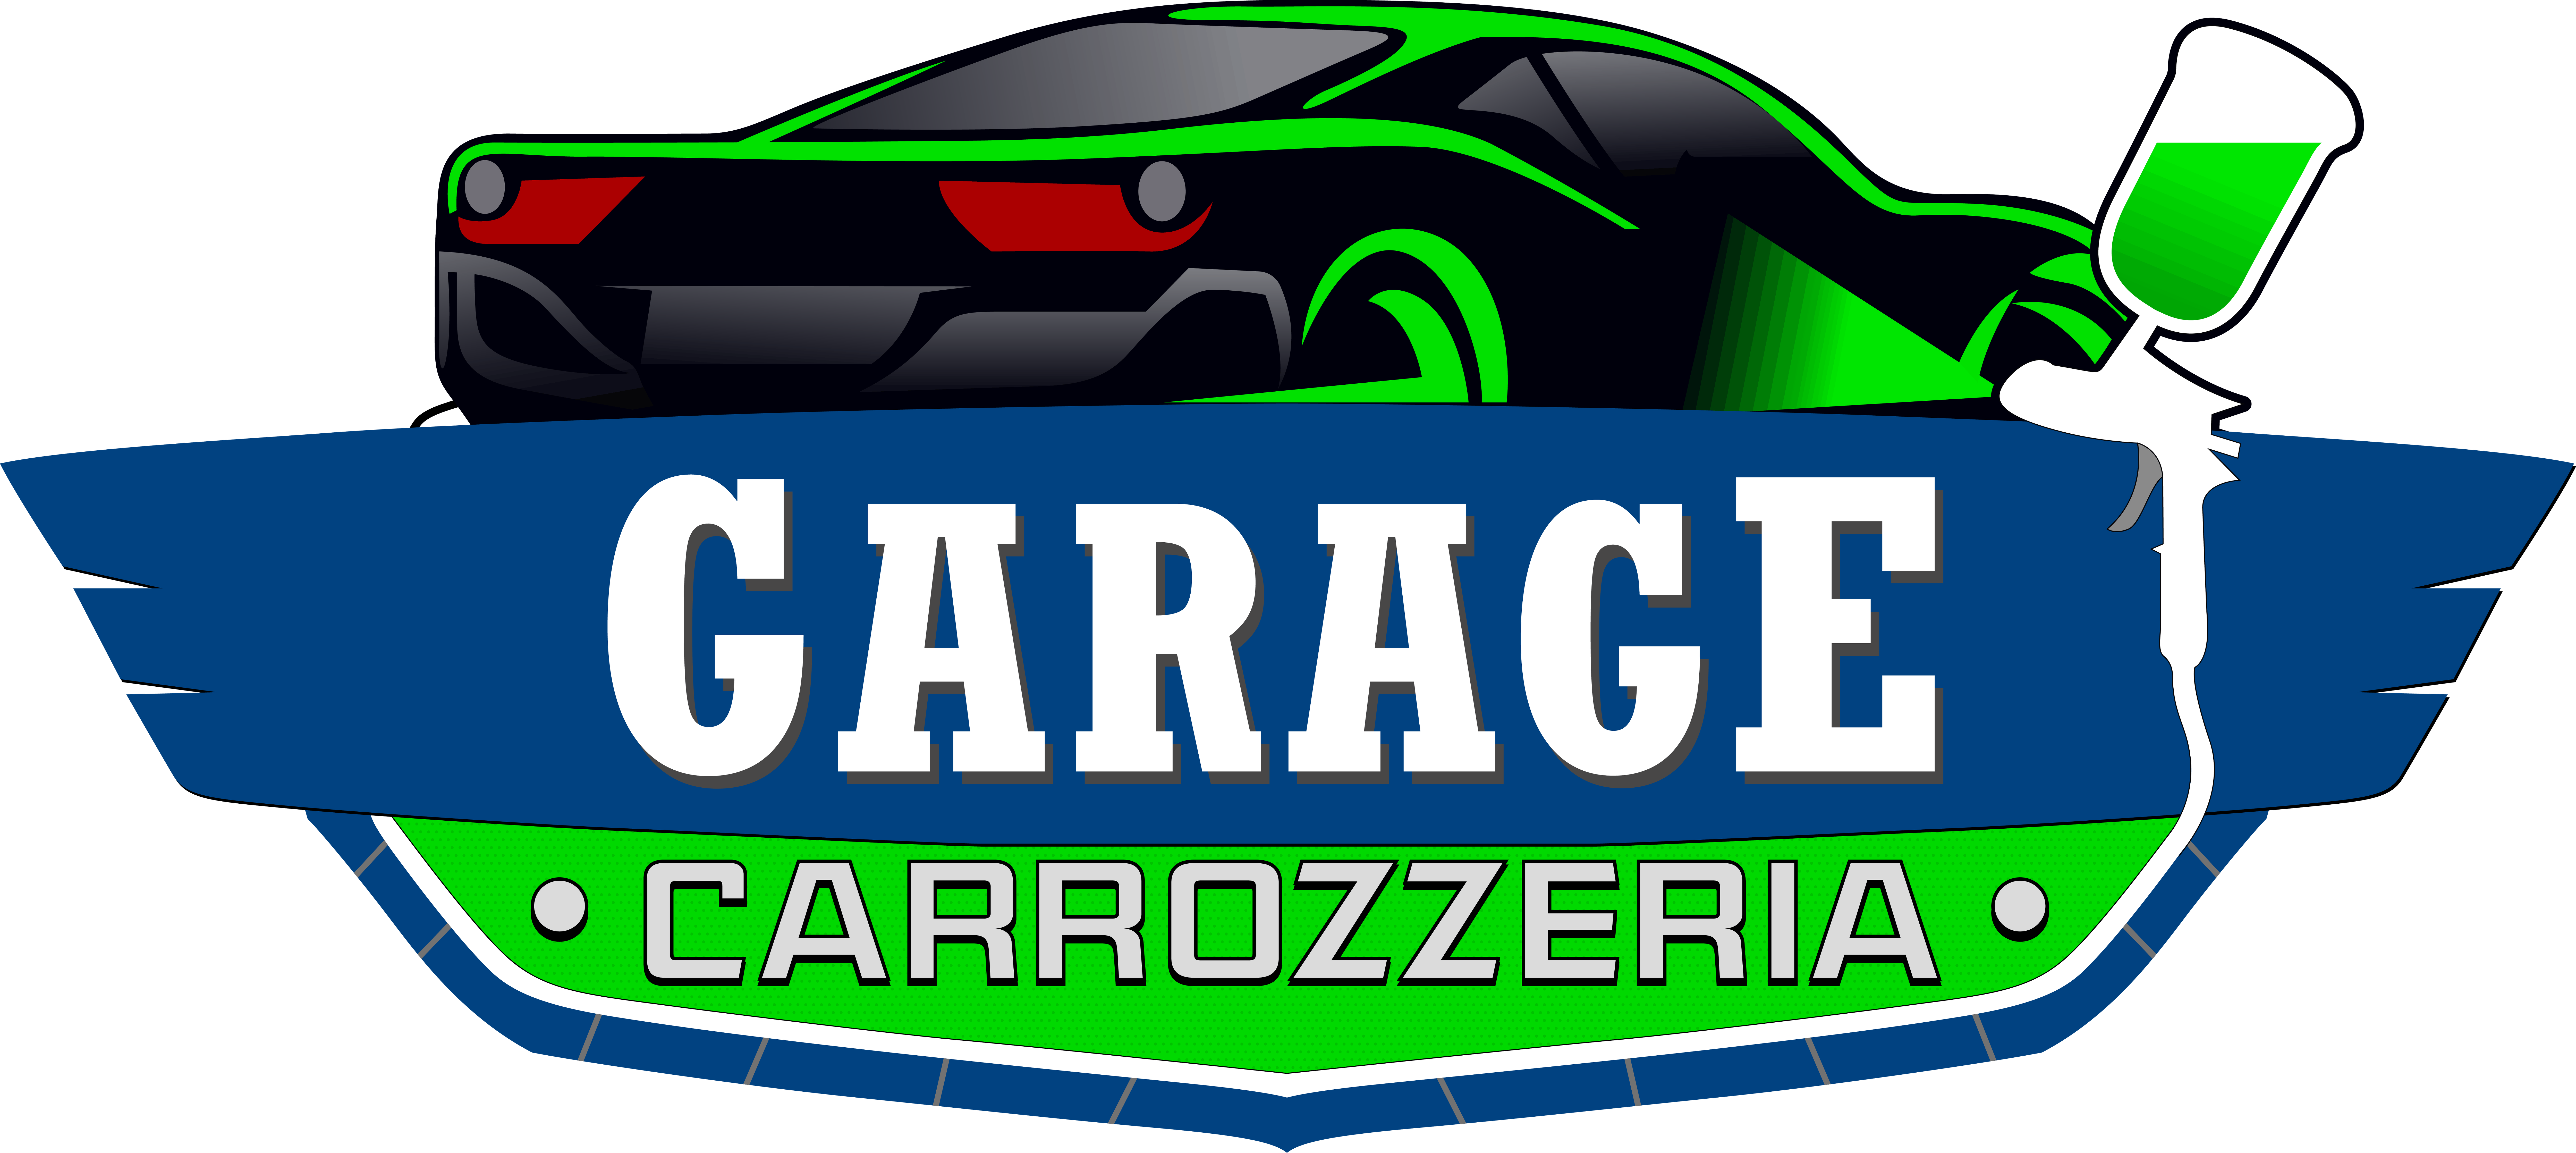 garage carrozzeria